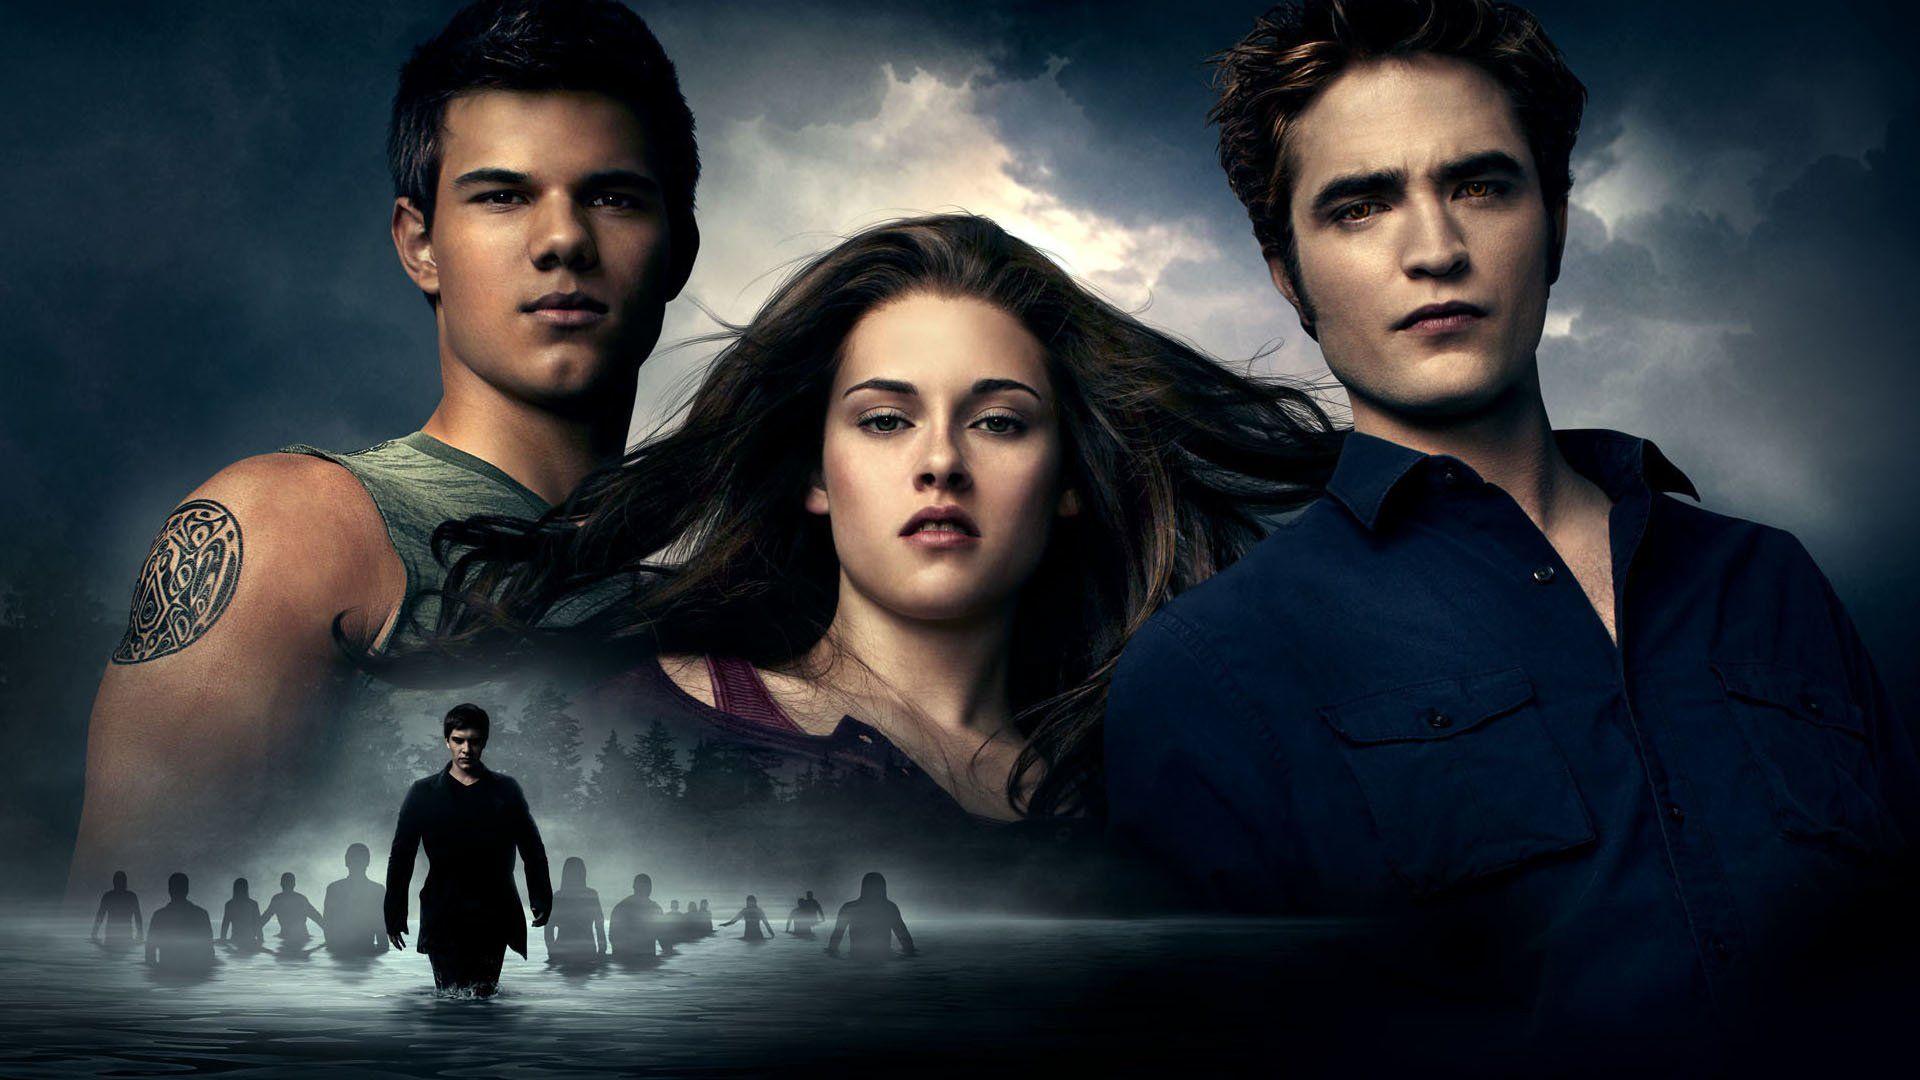 The Twilight Saga: Eclipse Wallpaper, Movies wallpaper, 2010